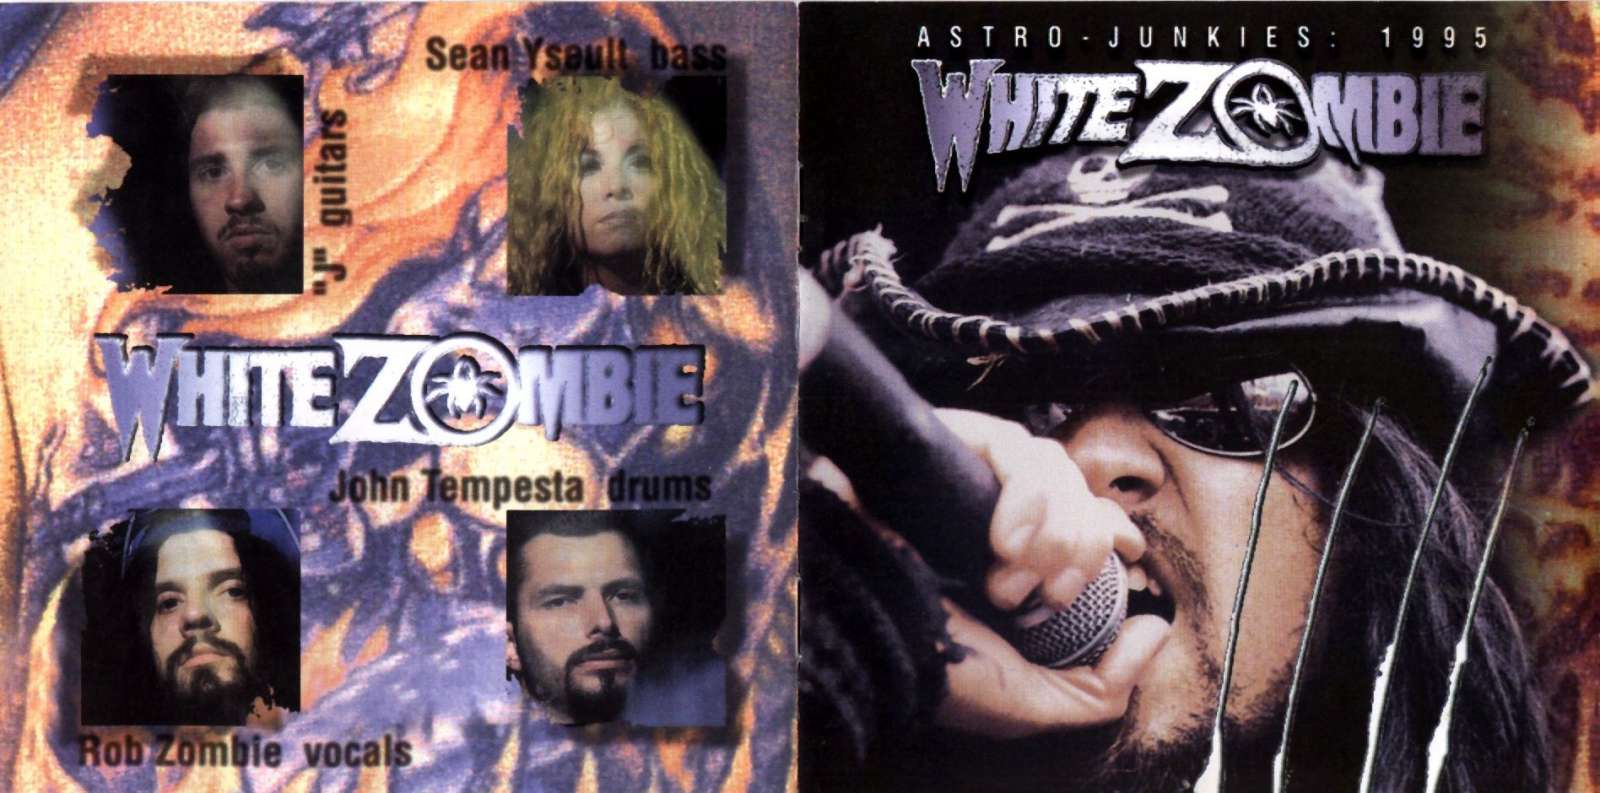 [White+Zombie+1995+Astro+Junkies+front.jpg]